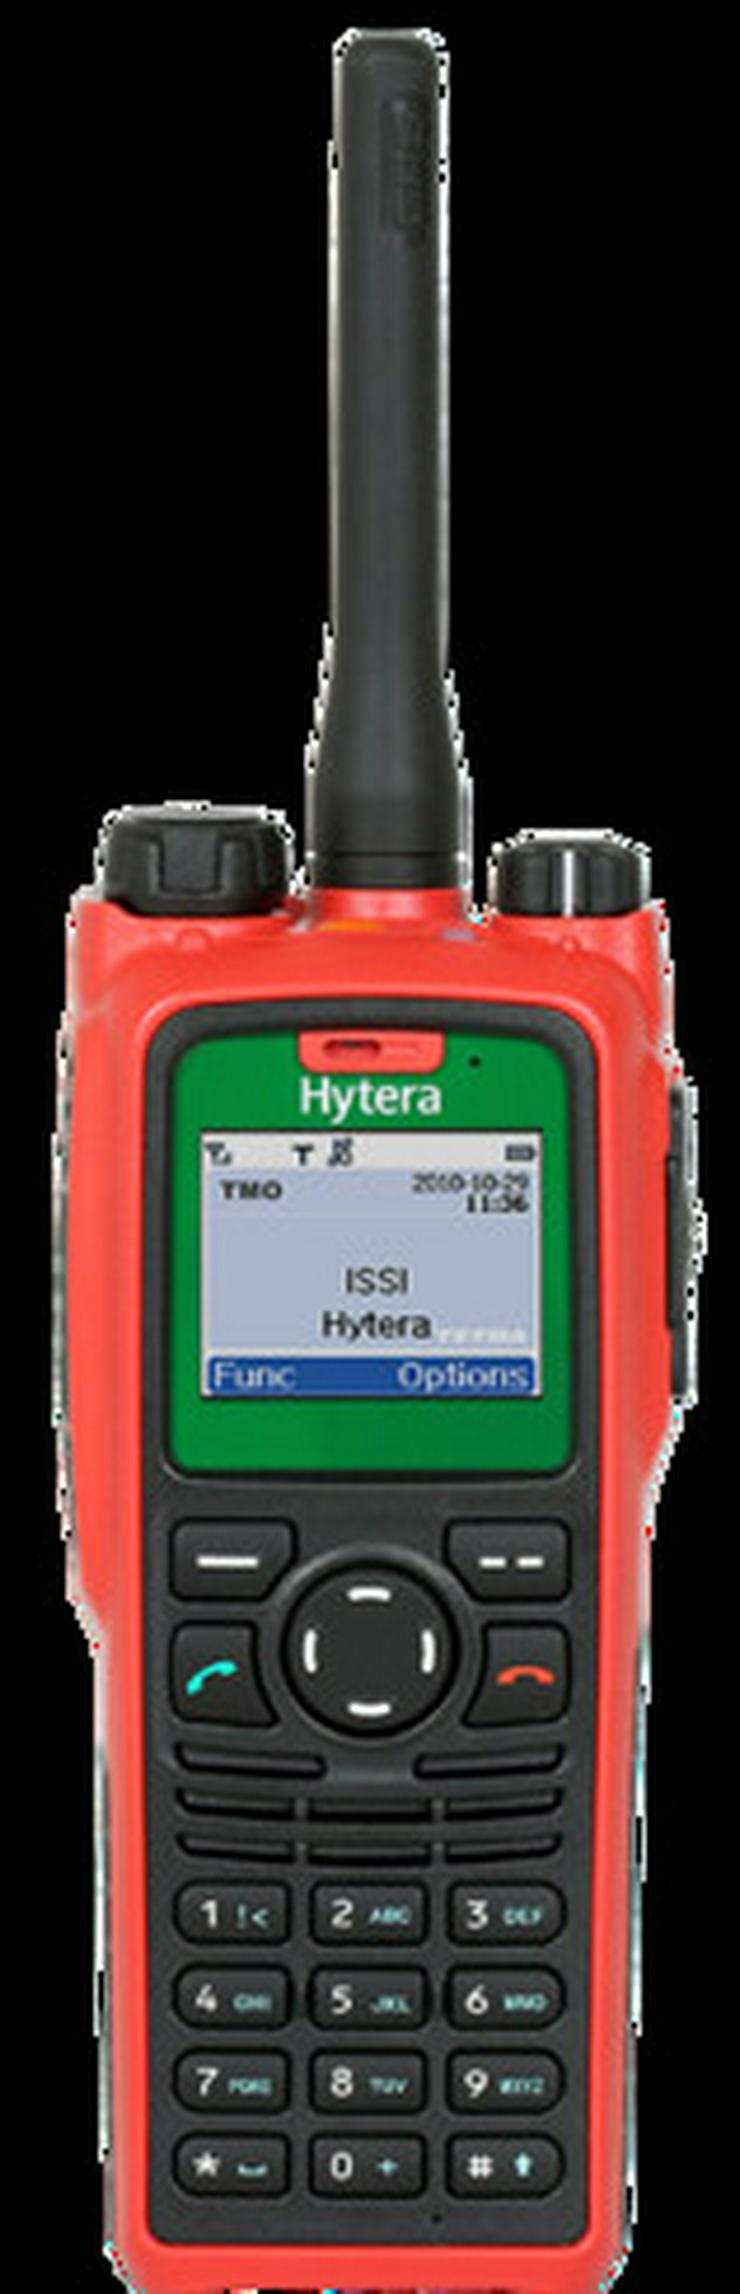 Bild 4: TC 620 Analoges hytera UHF Betriebsfunkgerät